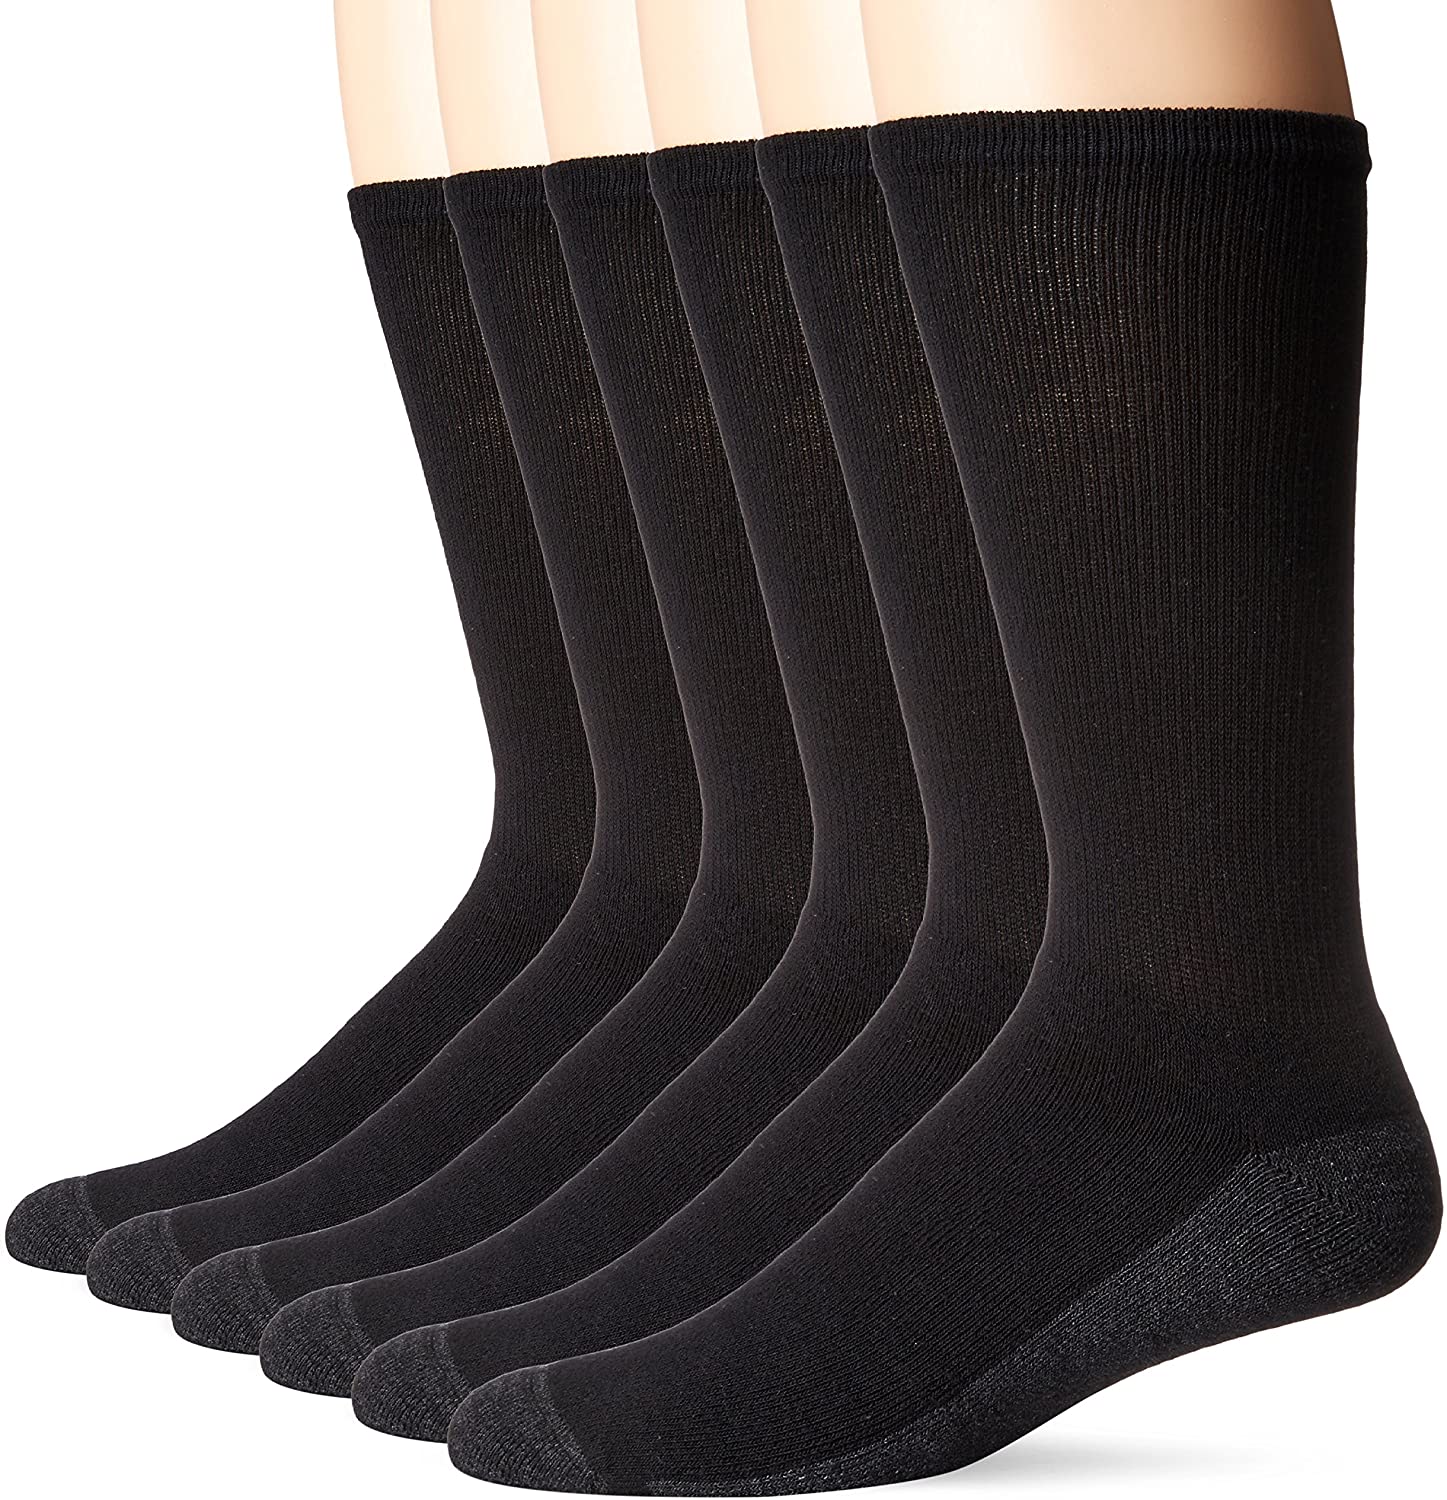 Hanes Men's Comfortblend Max Cushion Crew Socks 6-Pack | eBay